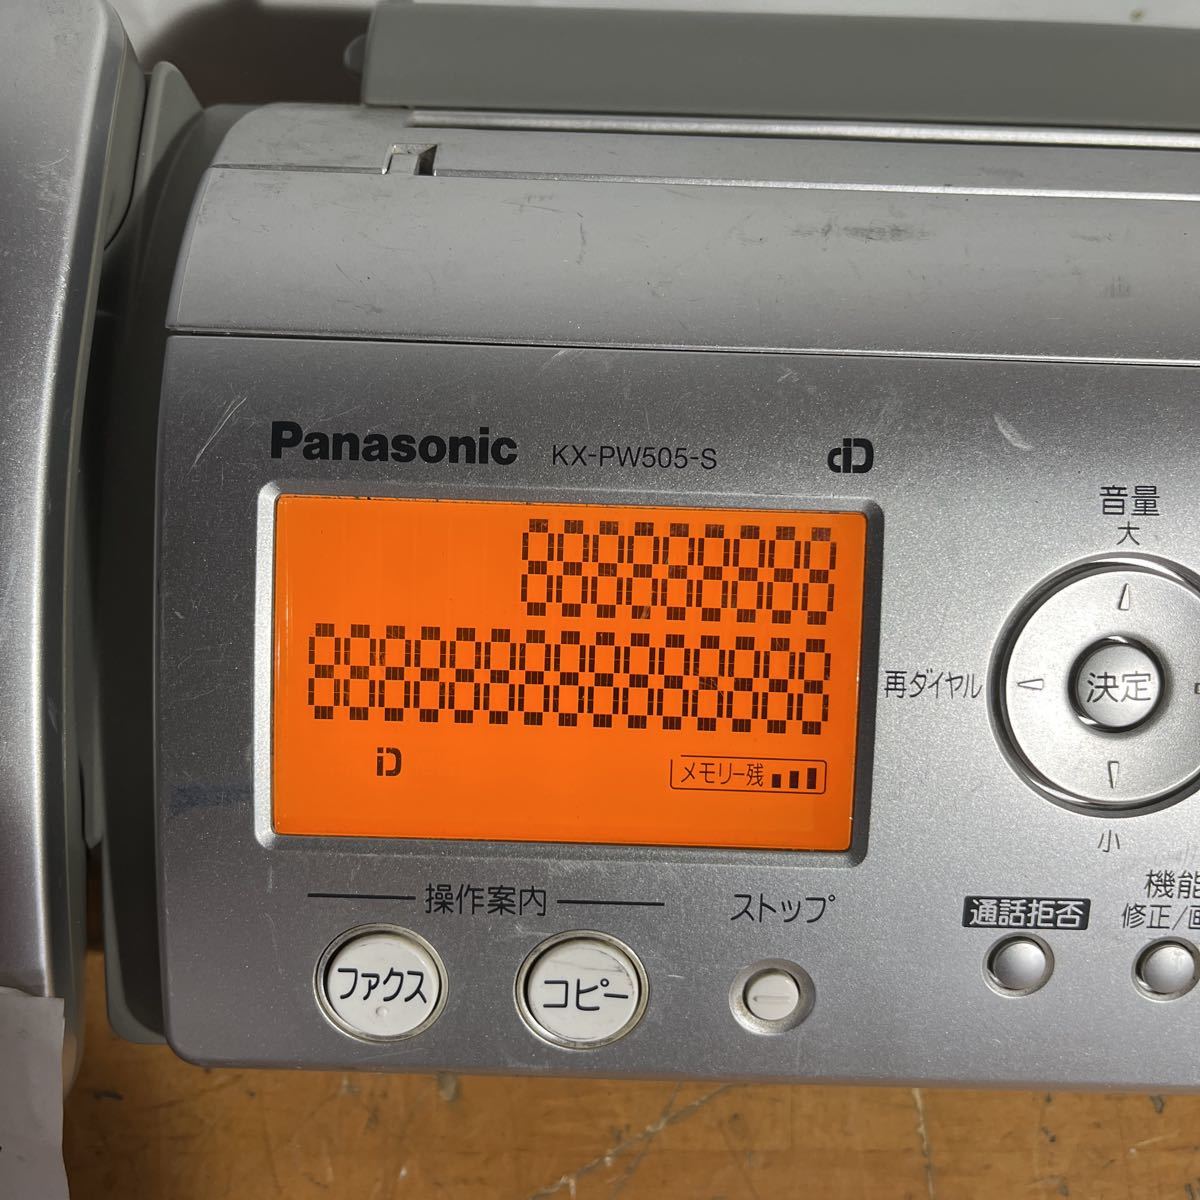 Panasonic KX-PW505-S cordless handset / facsimile 